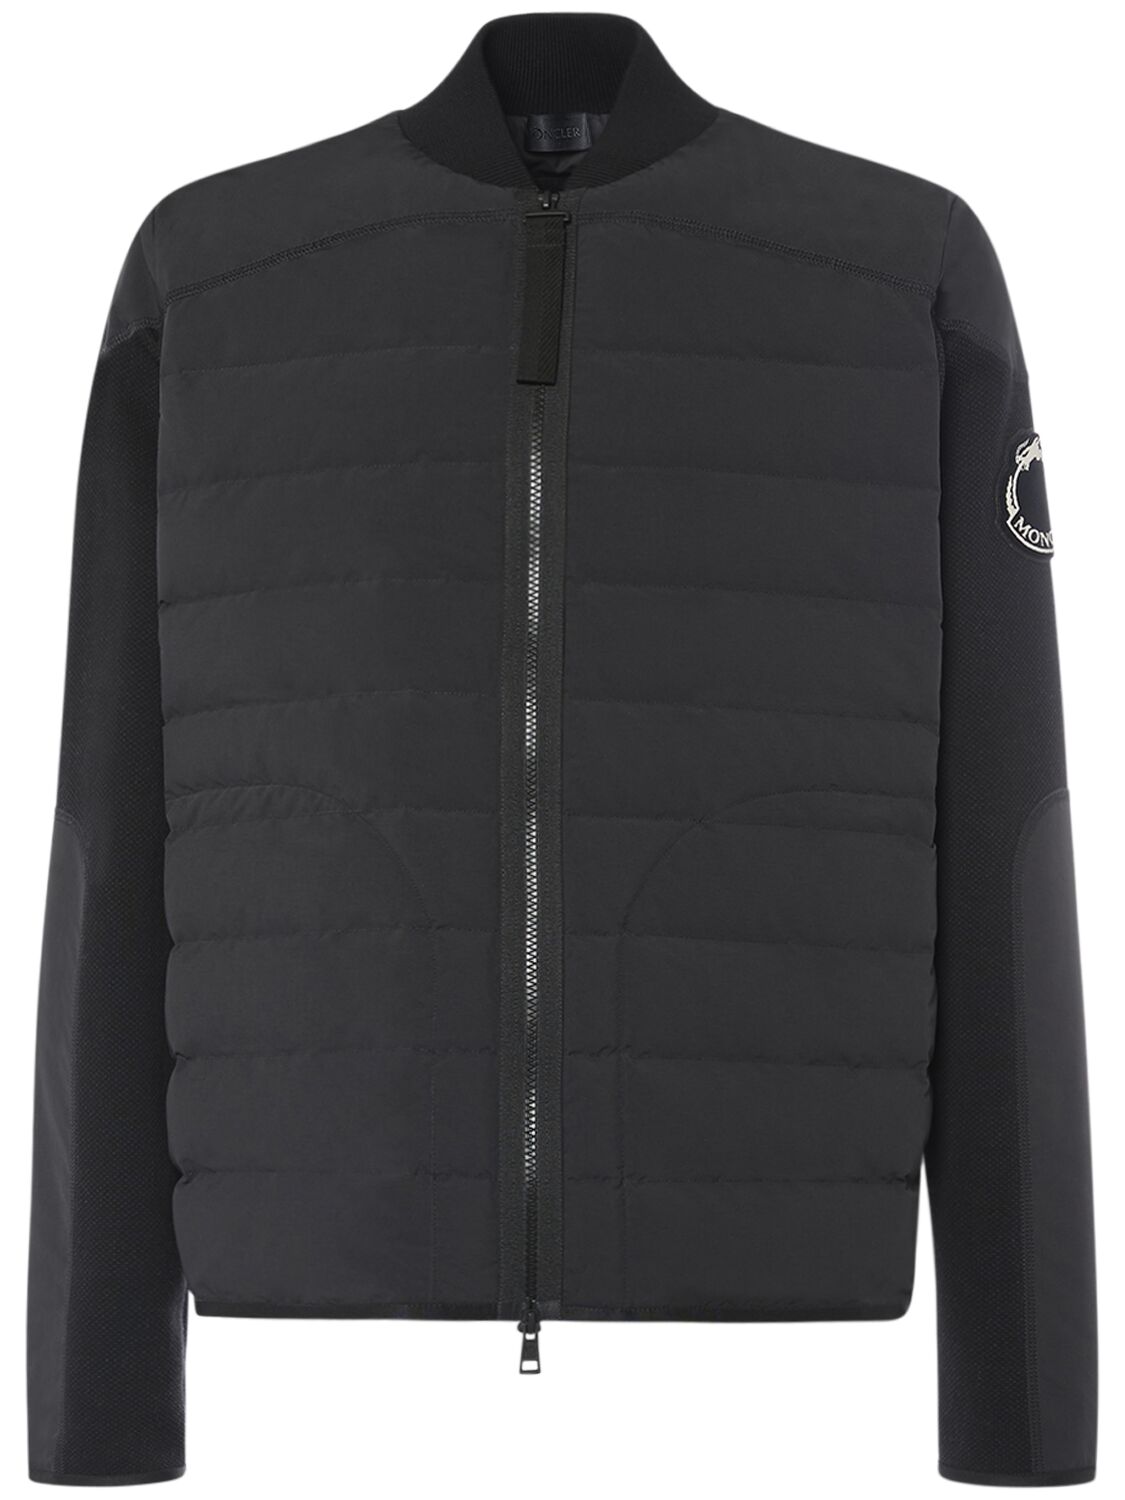 Cny Cotton & Tech Zip-up Cardigan Jacket